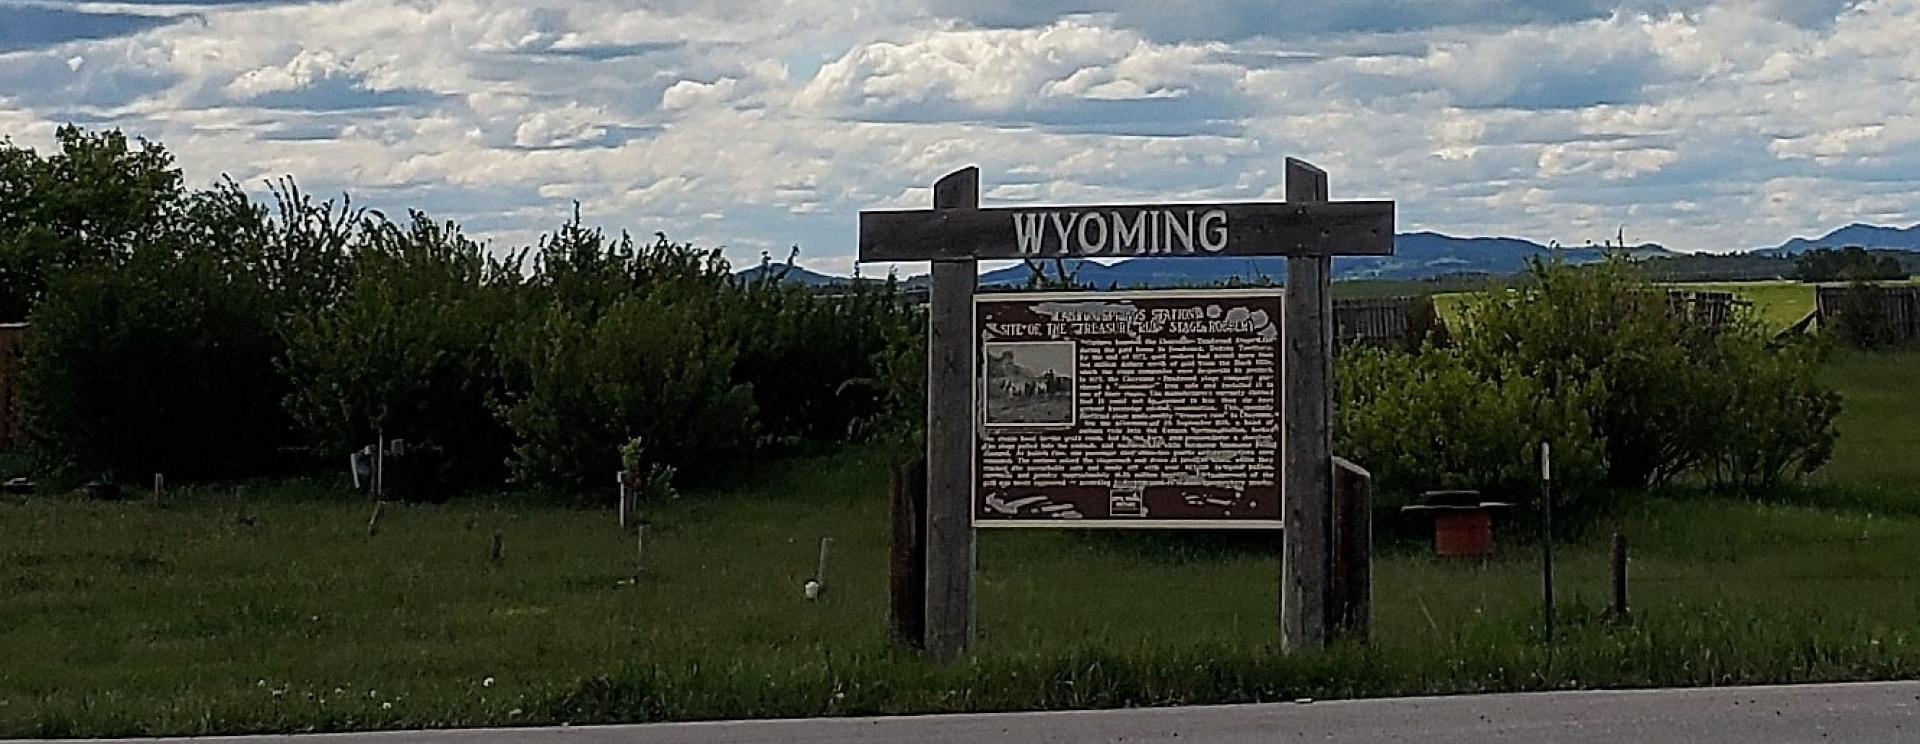 Weston County, Wyoming